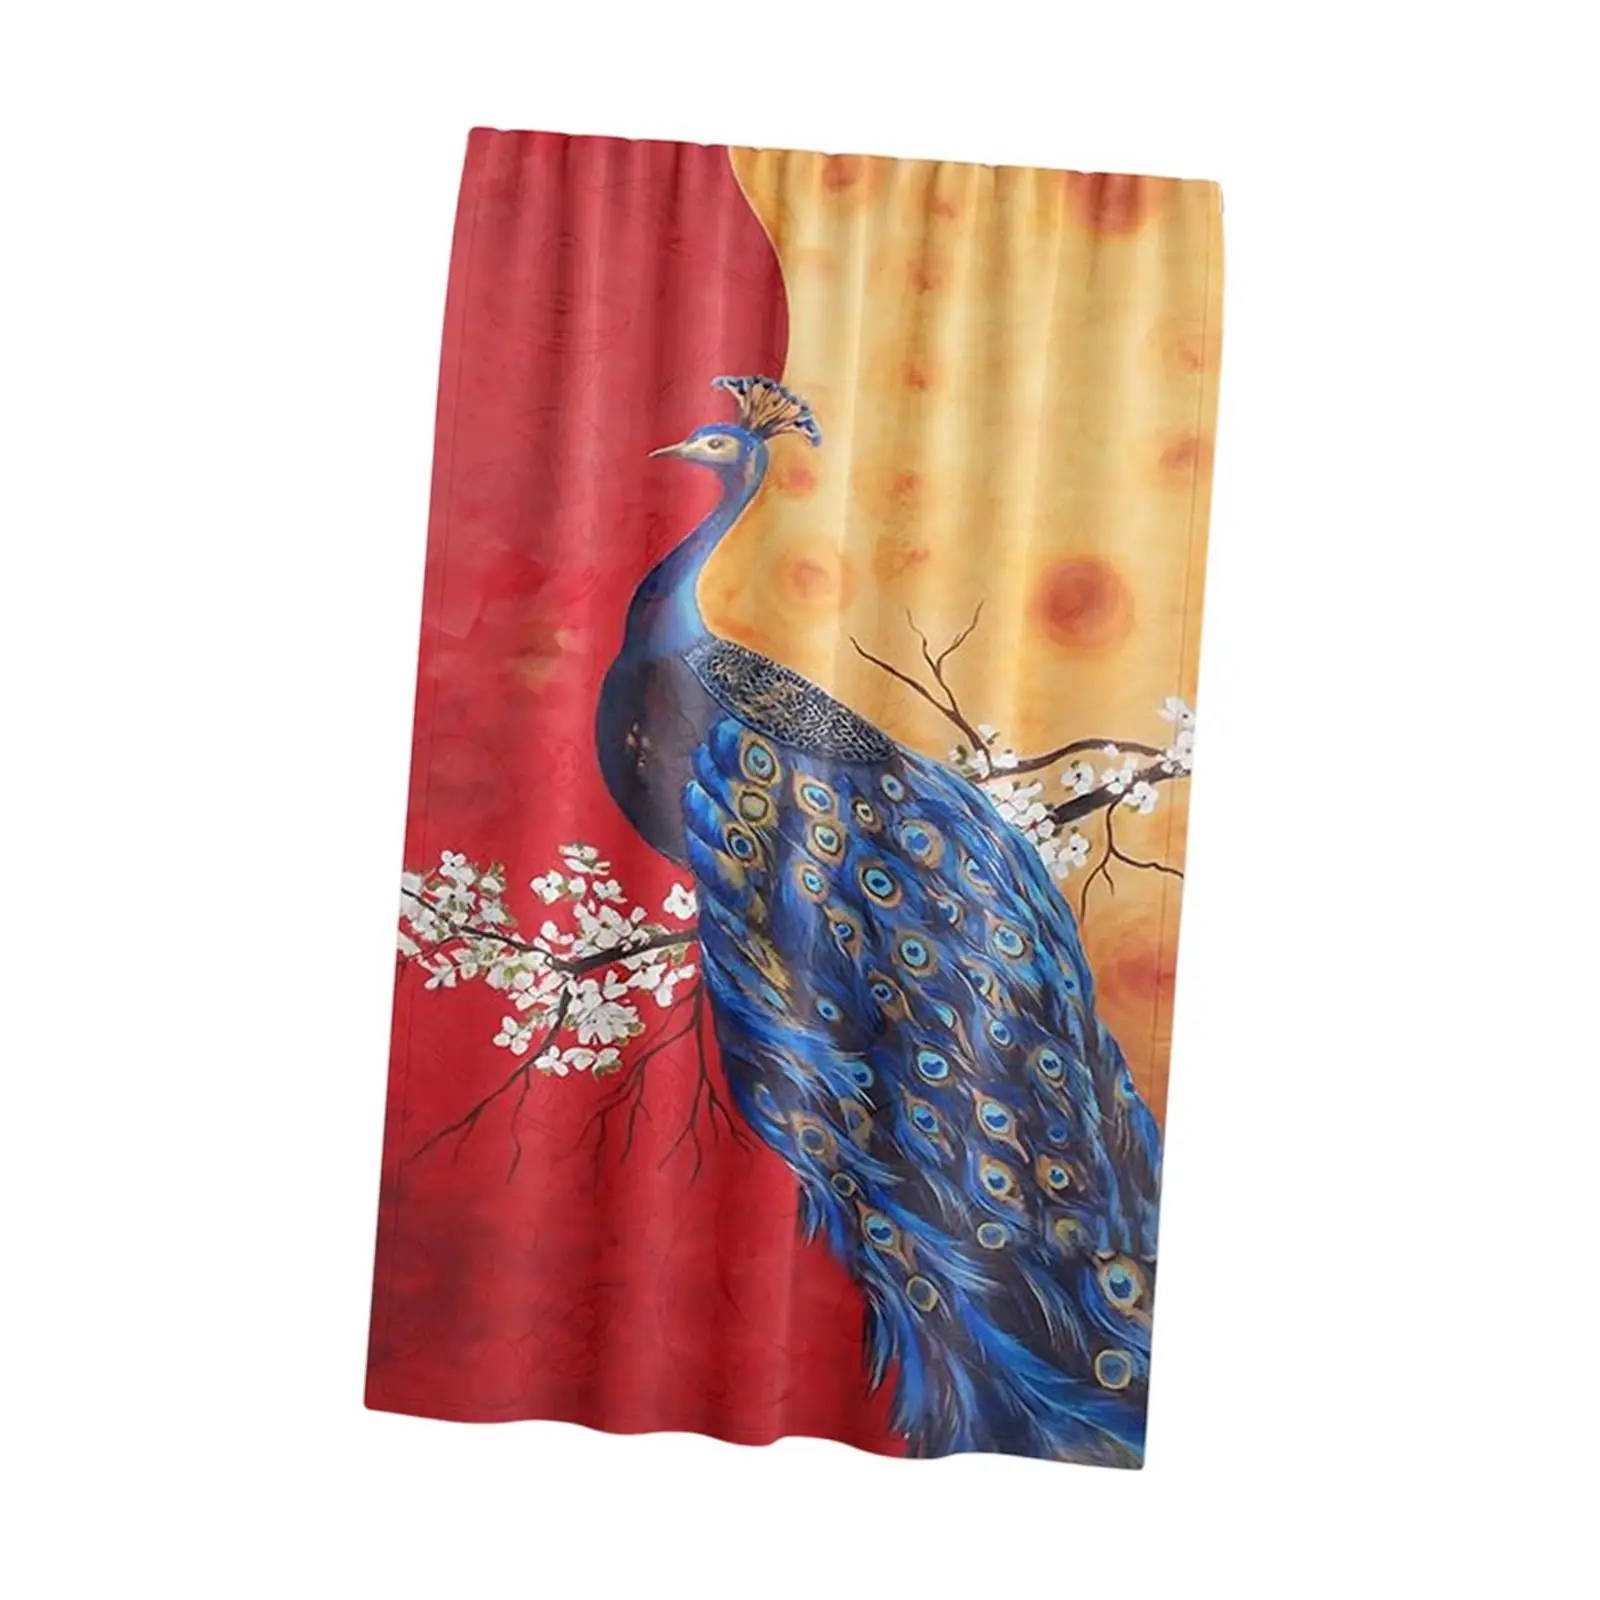 Peacock Print Curtain Panels Room Darkening Window Curtains for Bathroom 51.97`` W x 83.86`` L, Soft and Lighweight